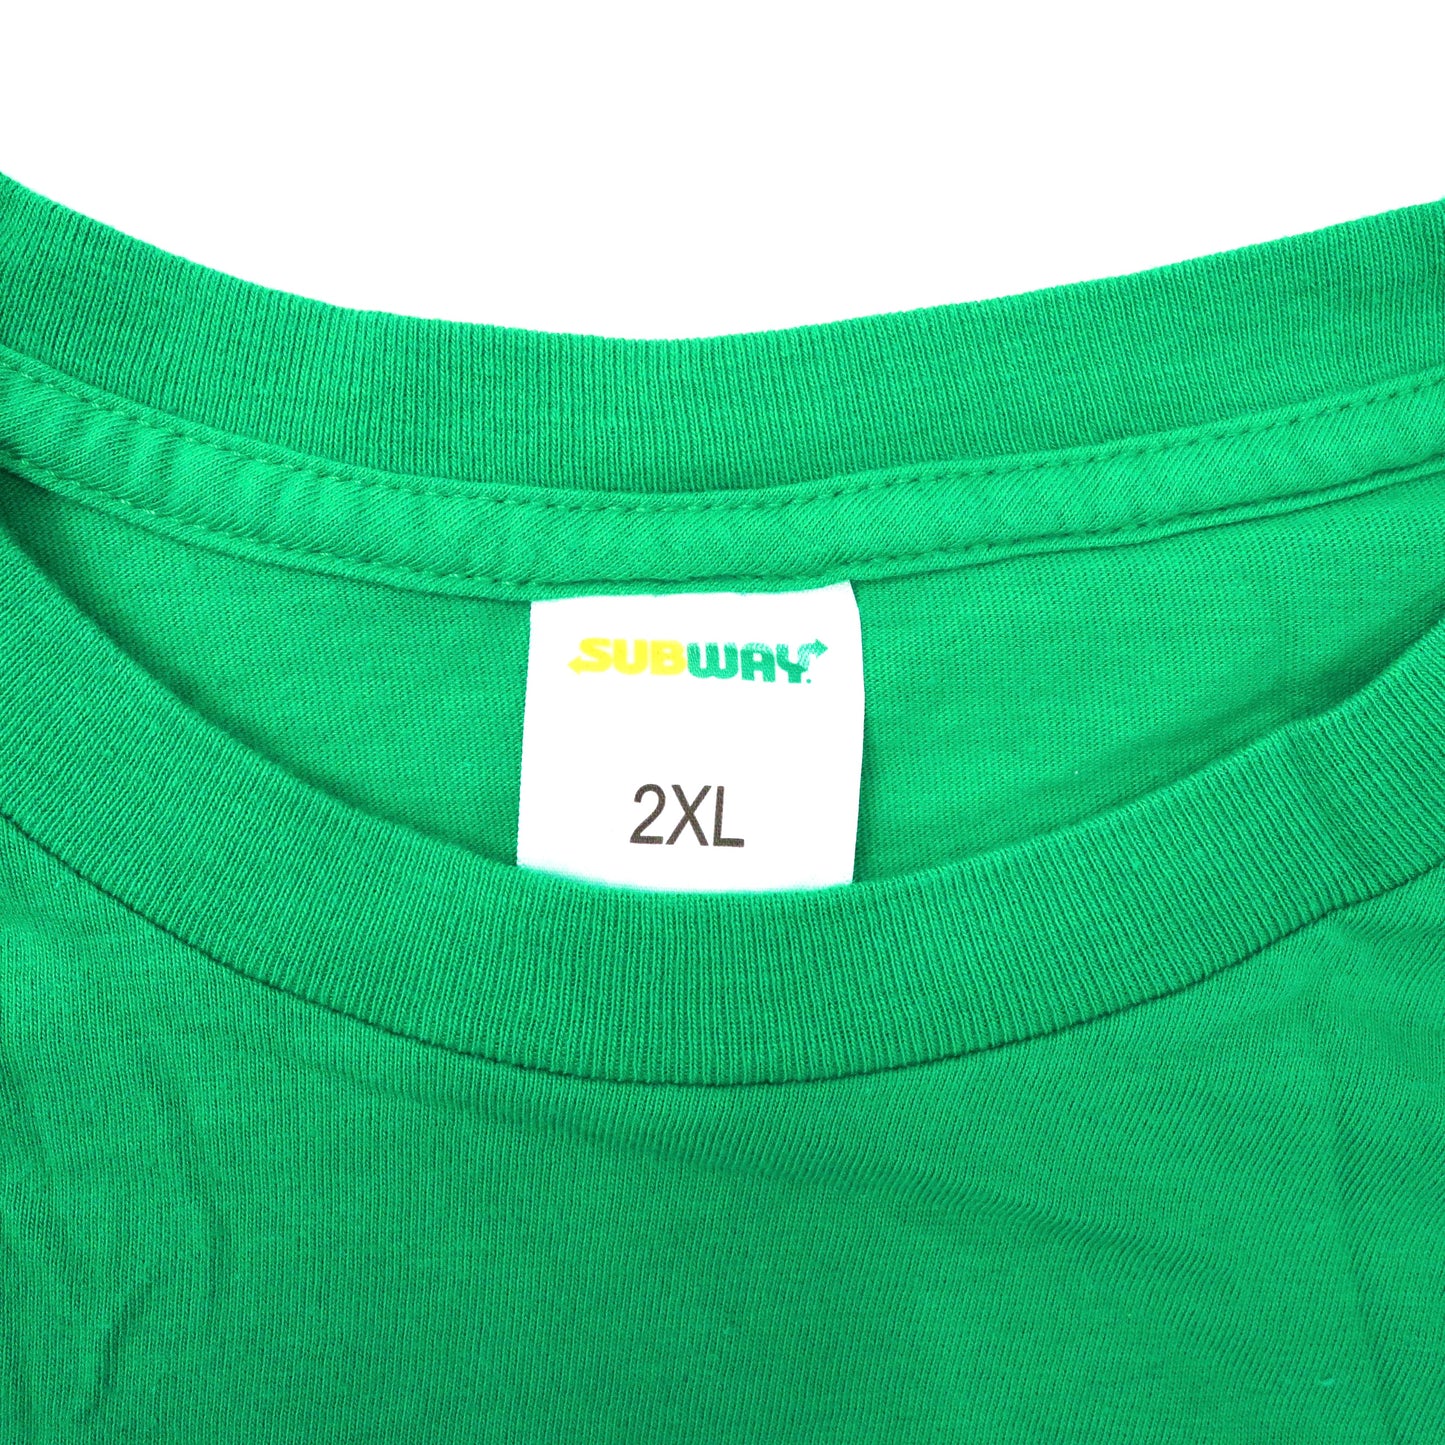 SUBWAY ビッグサイズ ロゴプリント ロングスリーブTシャツ 2XL グリーン コットン メキシコ製